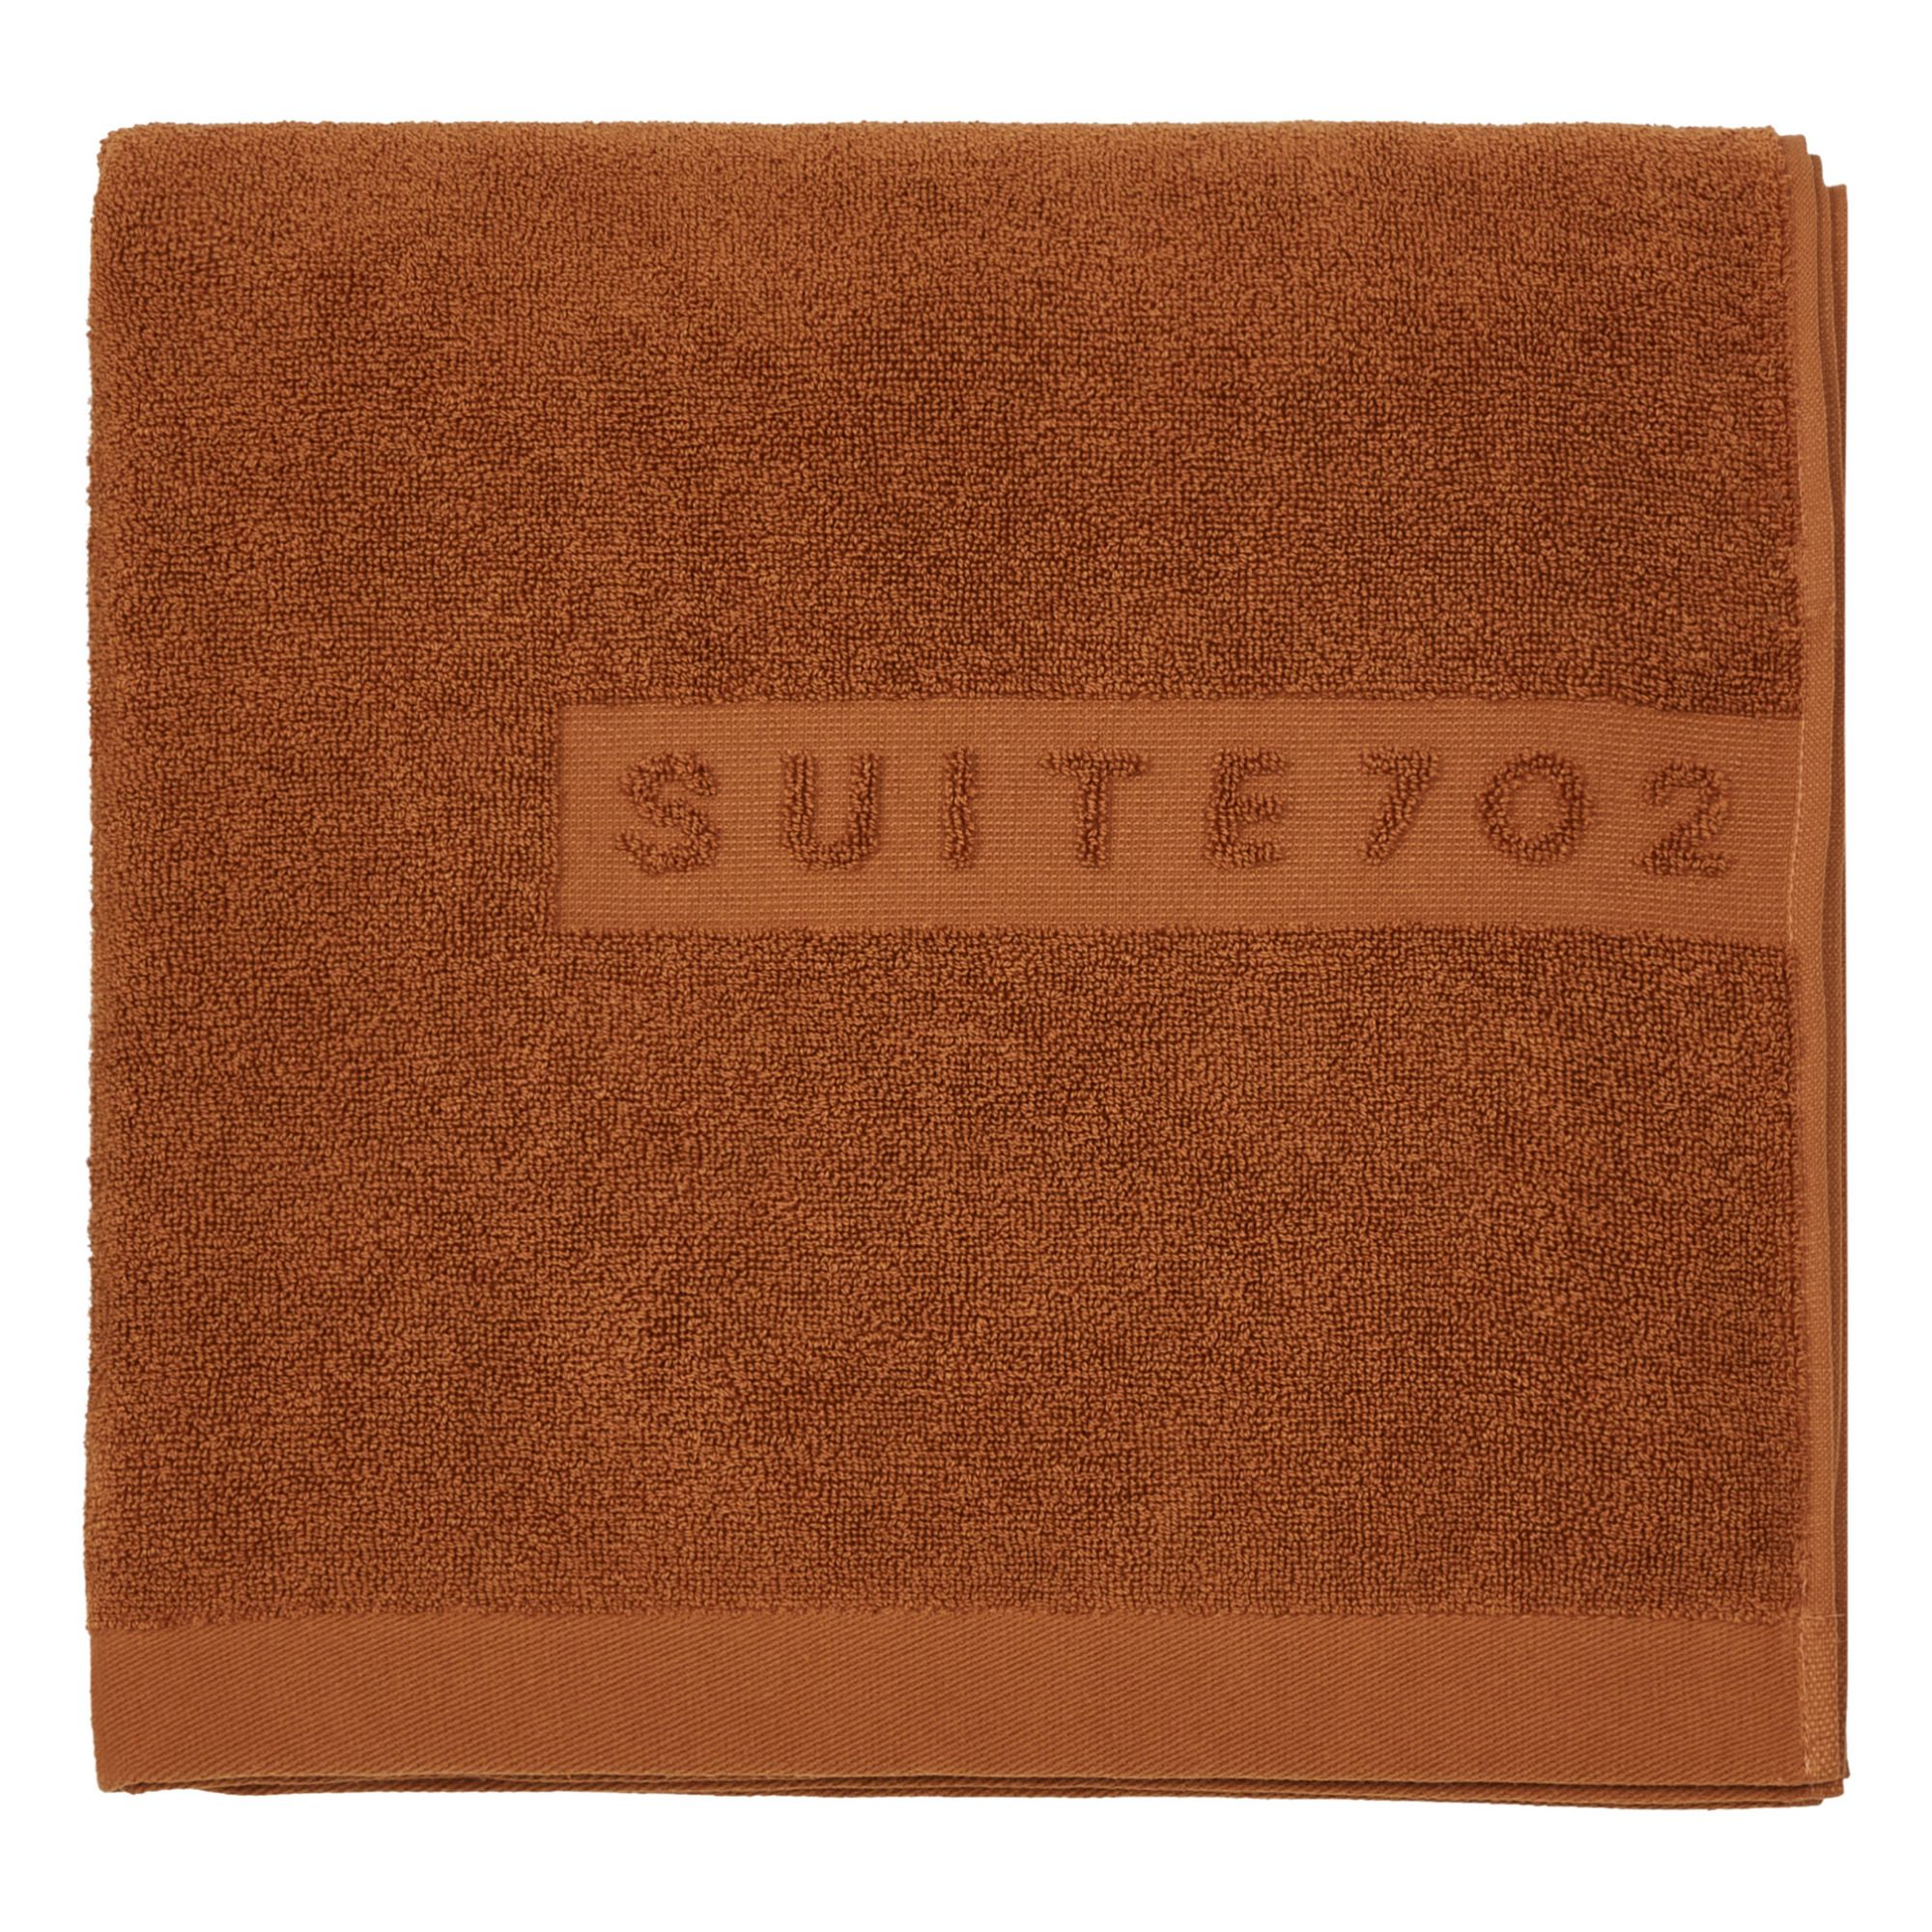 Suite 702 - Drap de bain en coton bio - Caramel